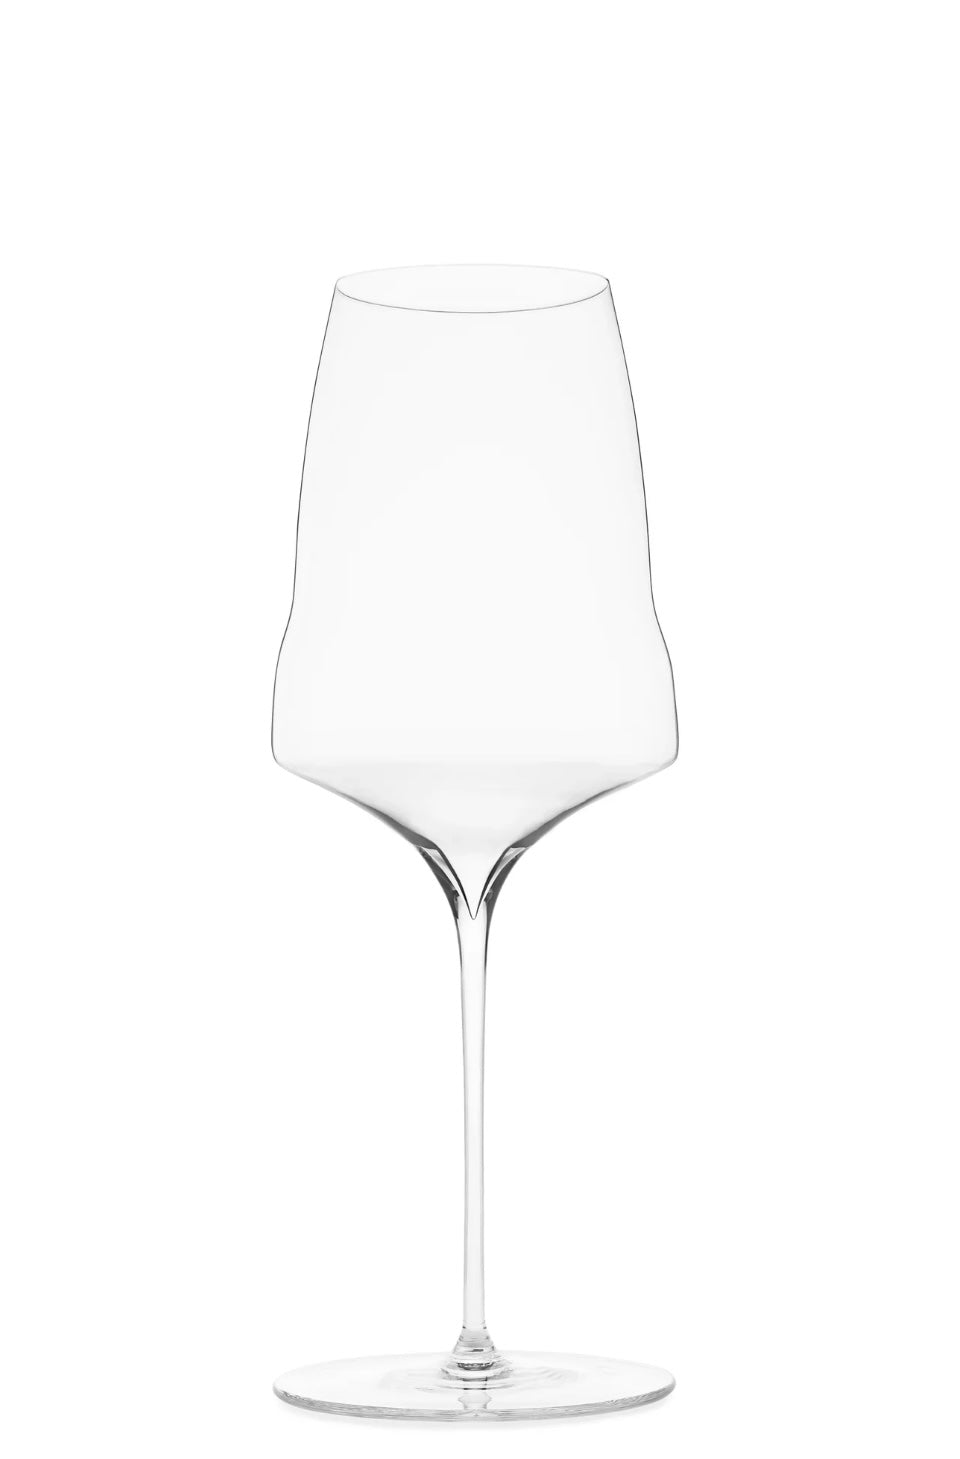 JOSEPHINE No. 2 – Universal (set of 6 glasses) - iWine.sg